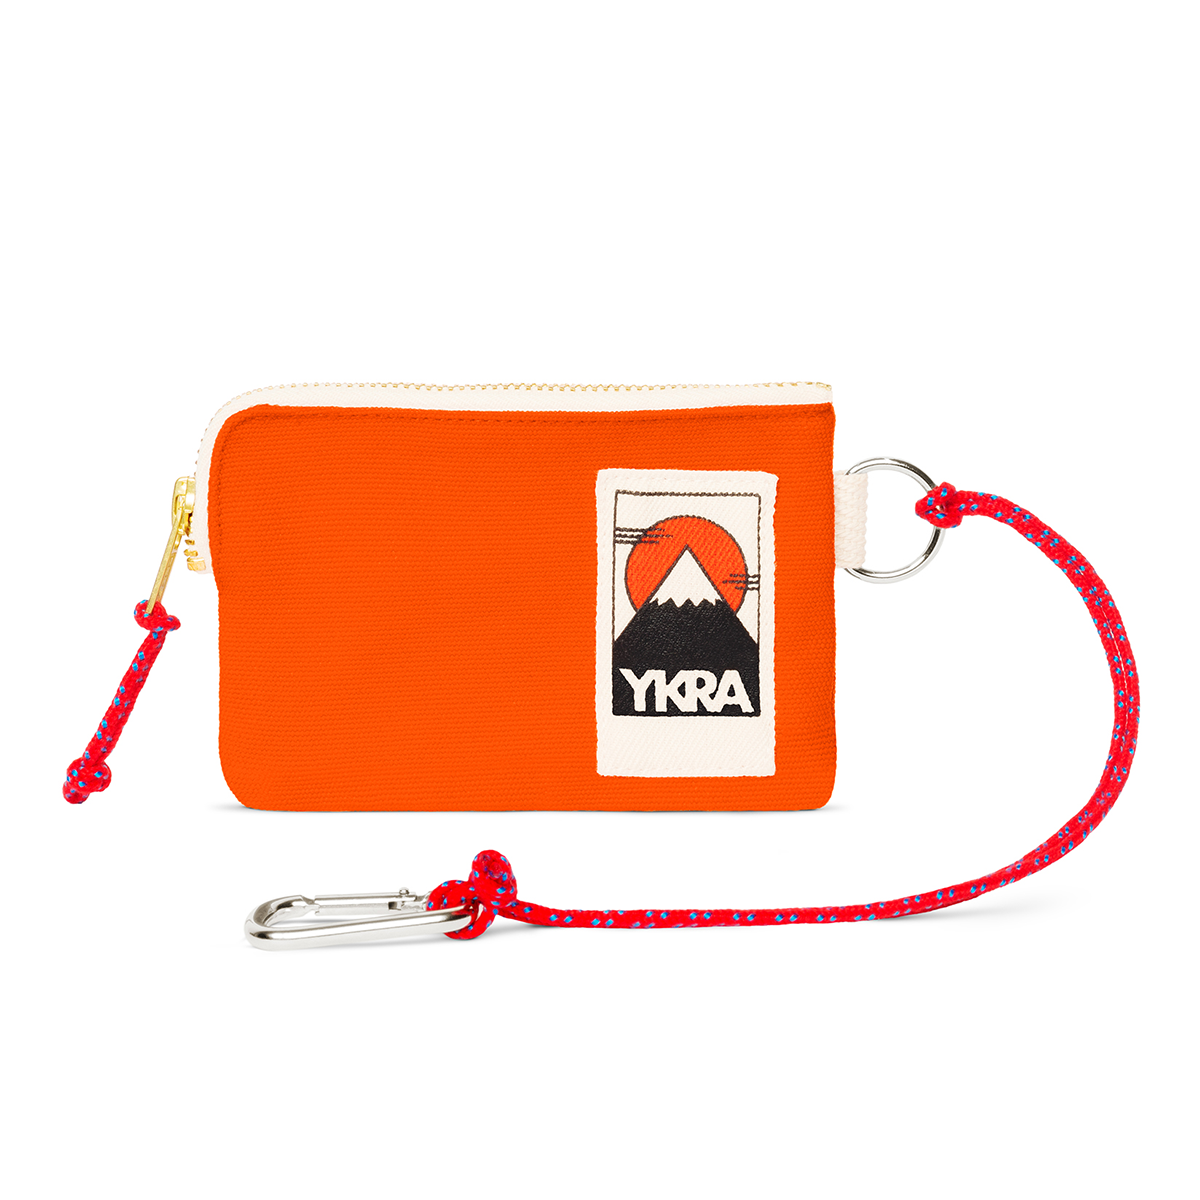 Mini Wallet Orange in the group Pens / Pen Accessories / Pencil Cases at Pen Store (126527)